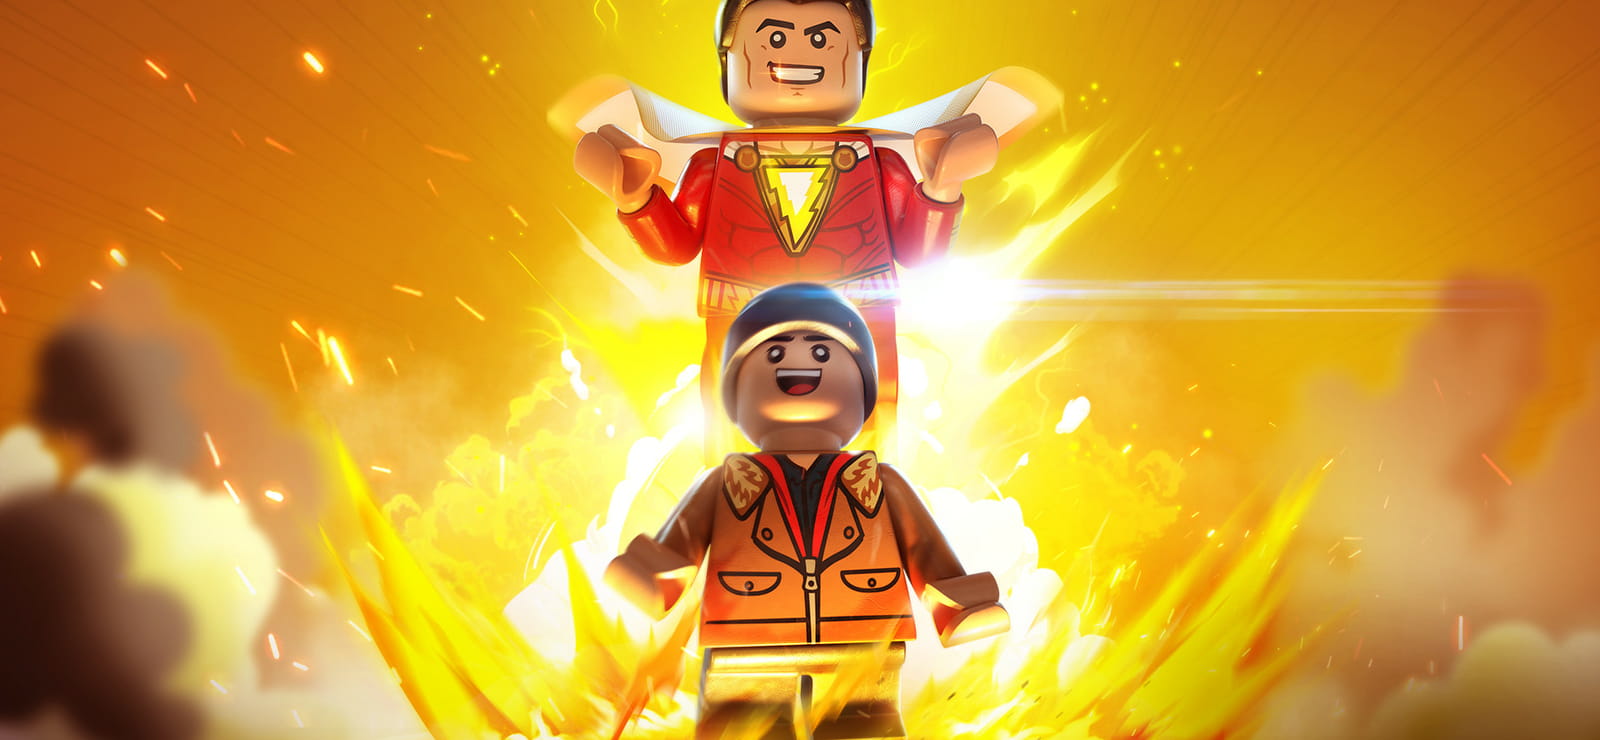 LEGO® DC Super-Villains Shazam! Movie Level Pack 1 & 2